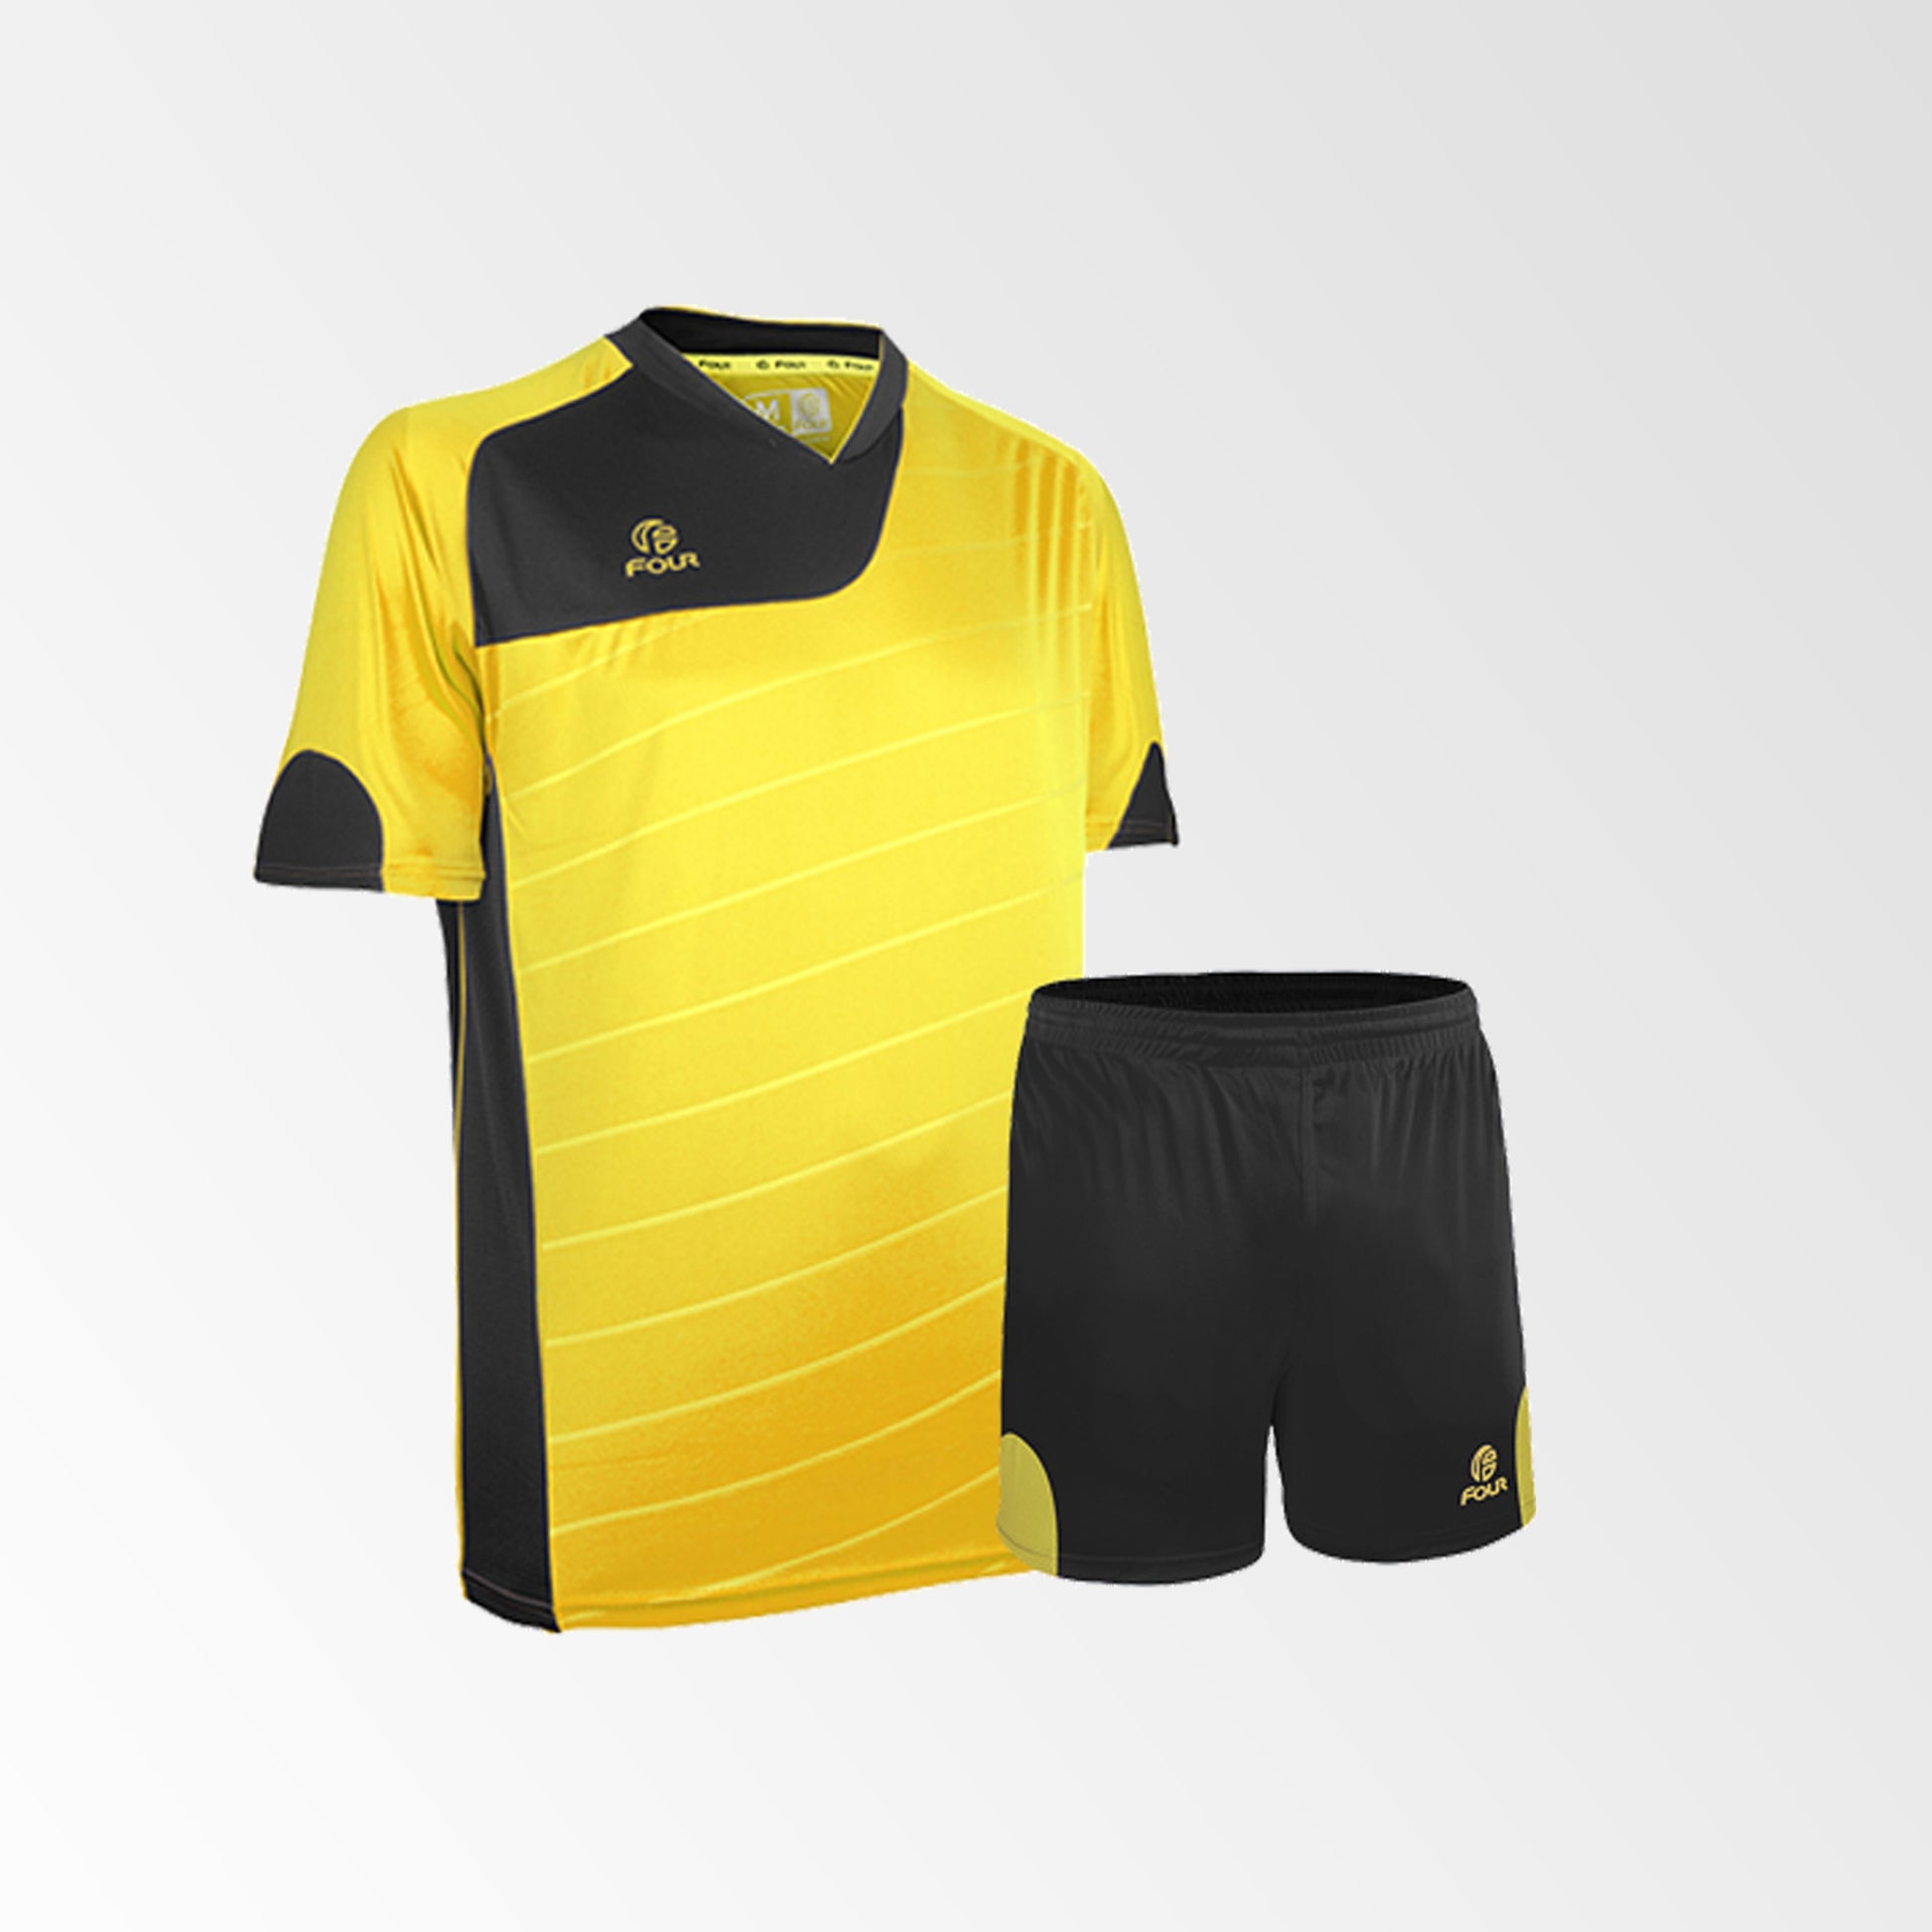 Camisetas amarillas deportivas